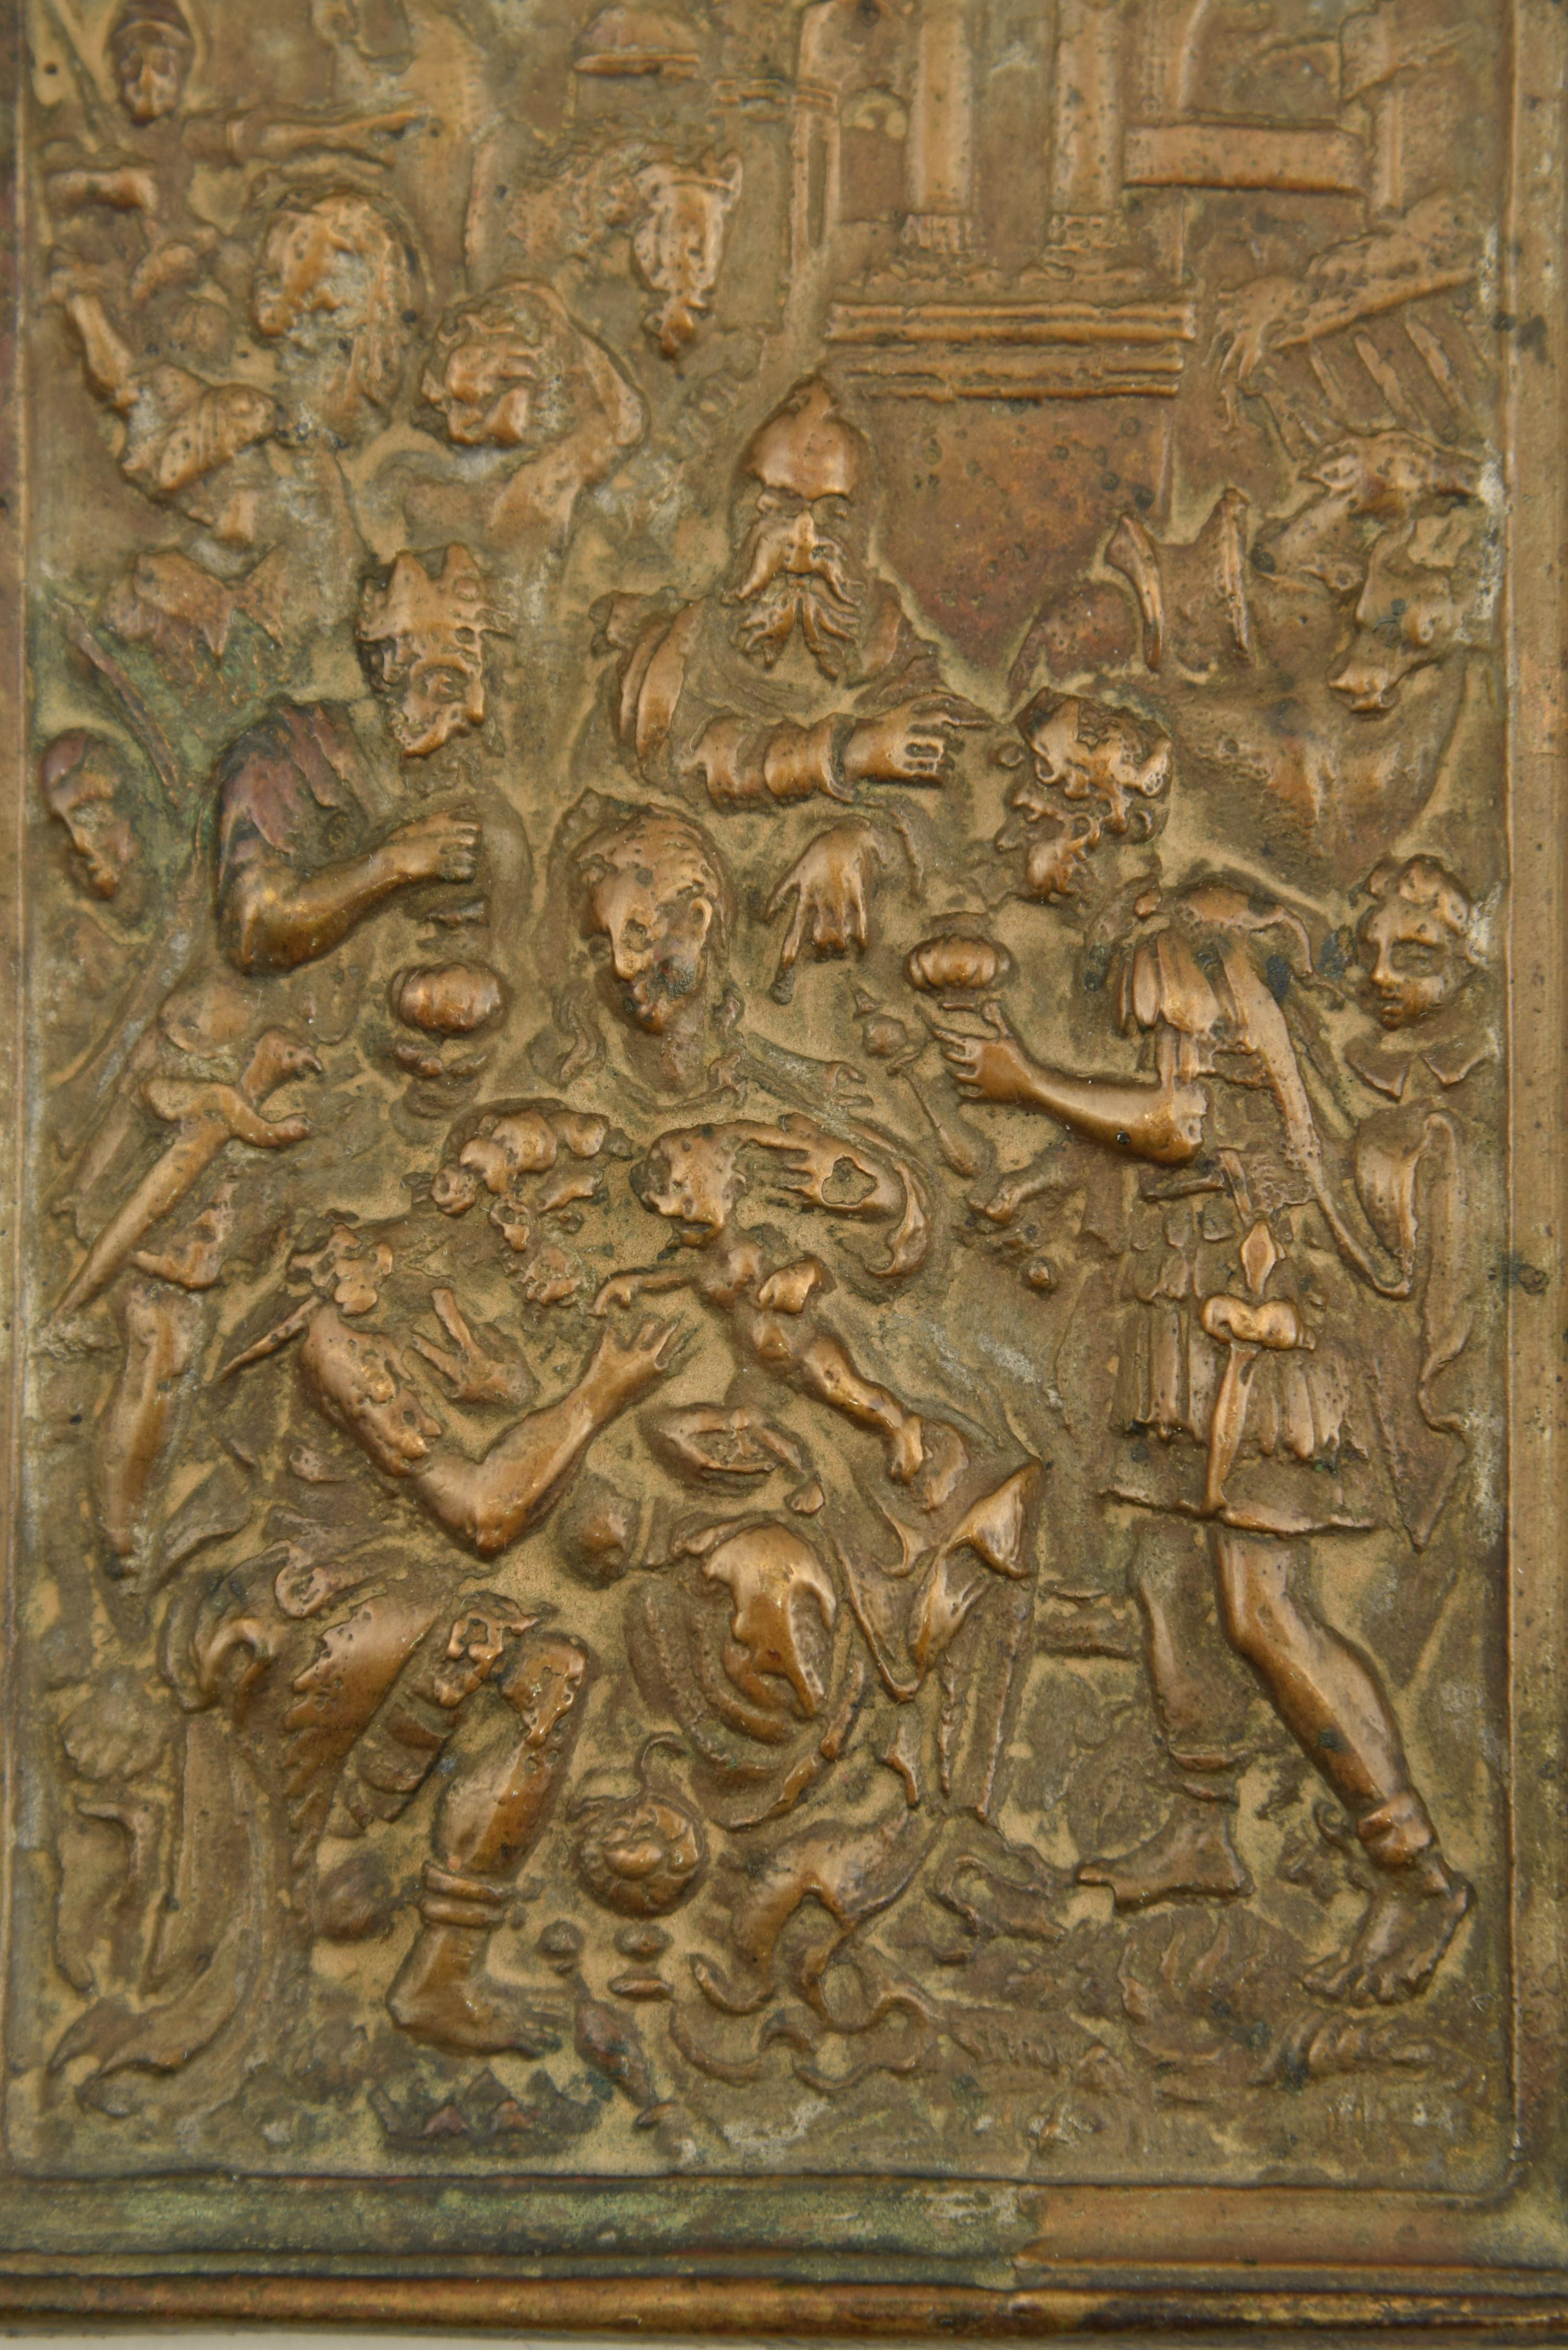 Baroque Devotional Plaque, Nativity. Bronze, Spain, 16th-17th Centuries